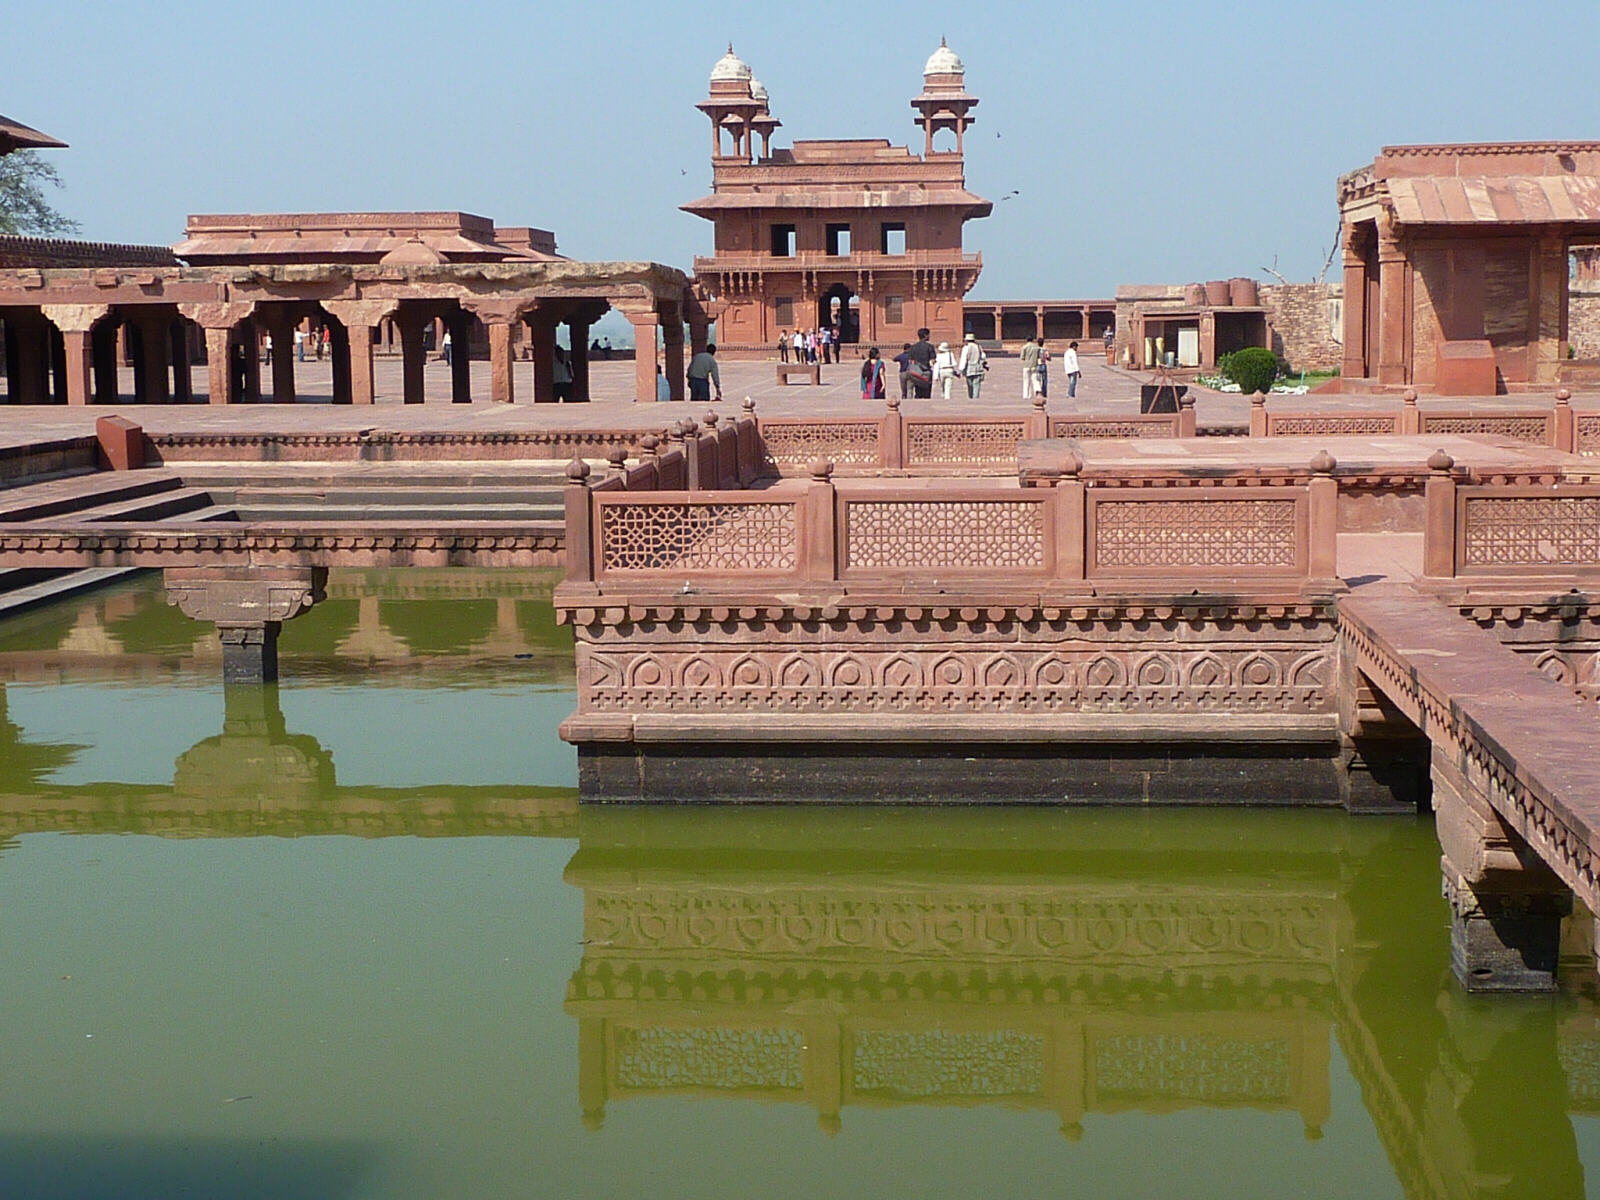 The palace at Fatehpur Sikri, India